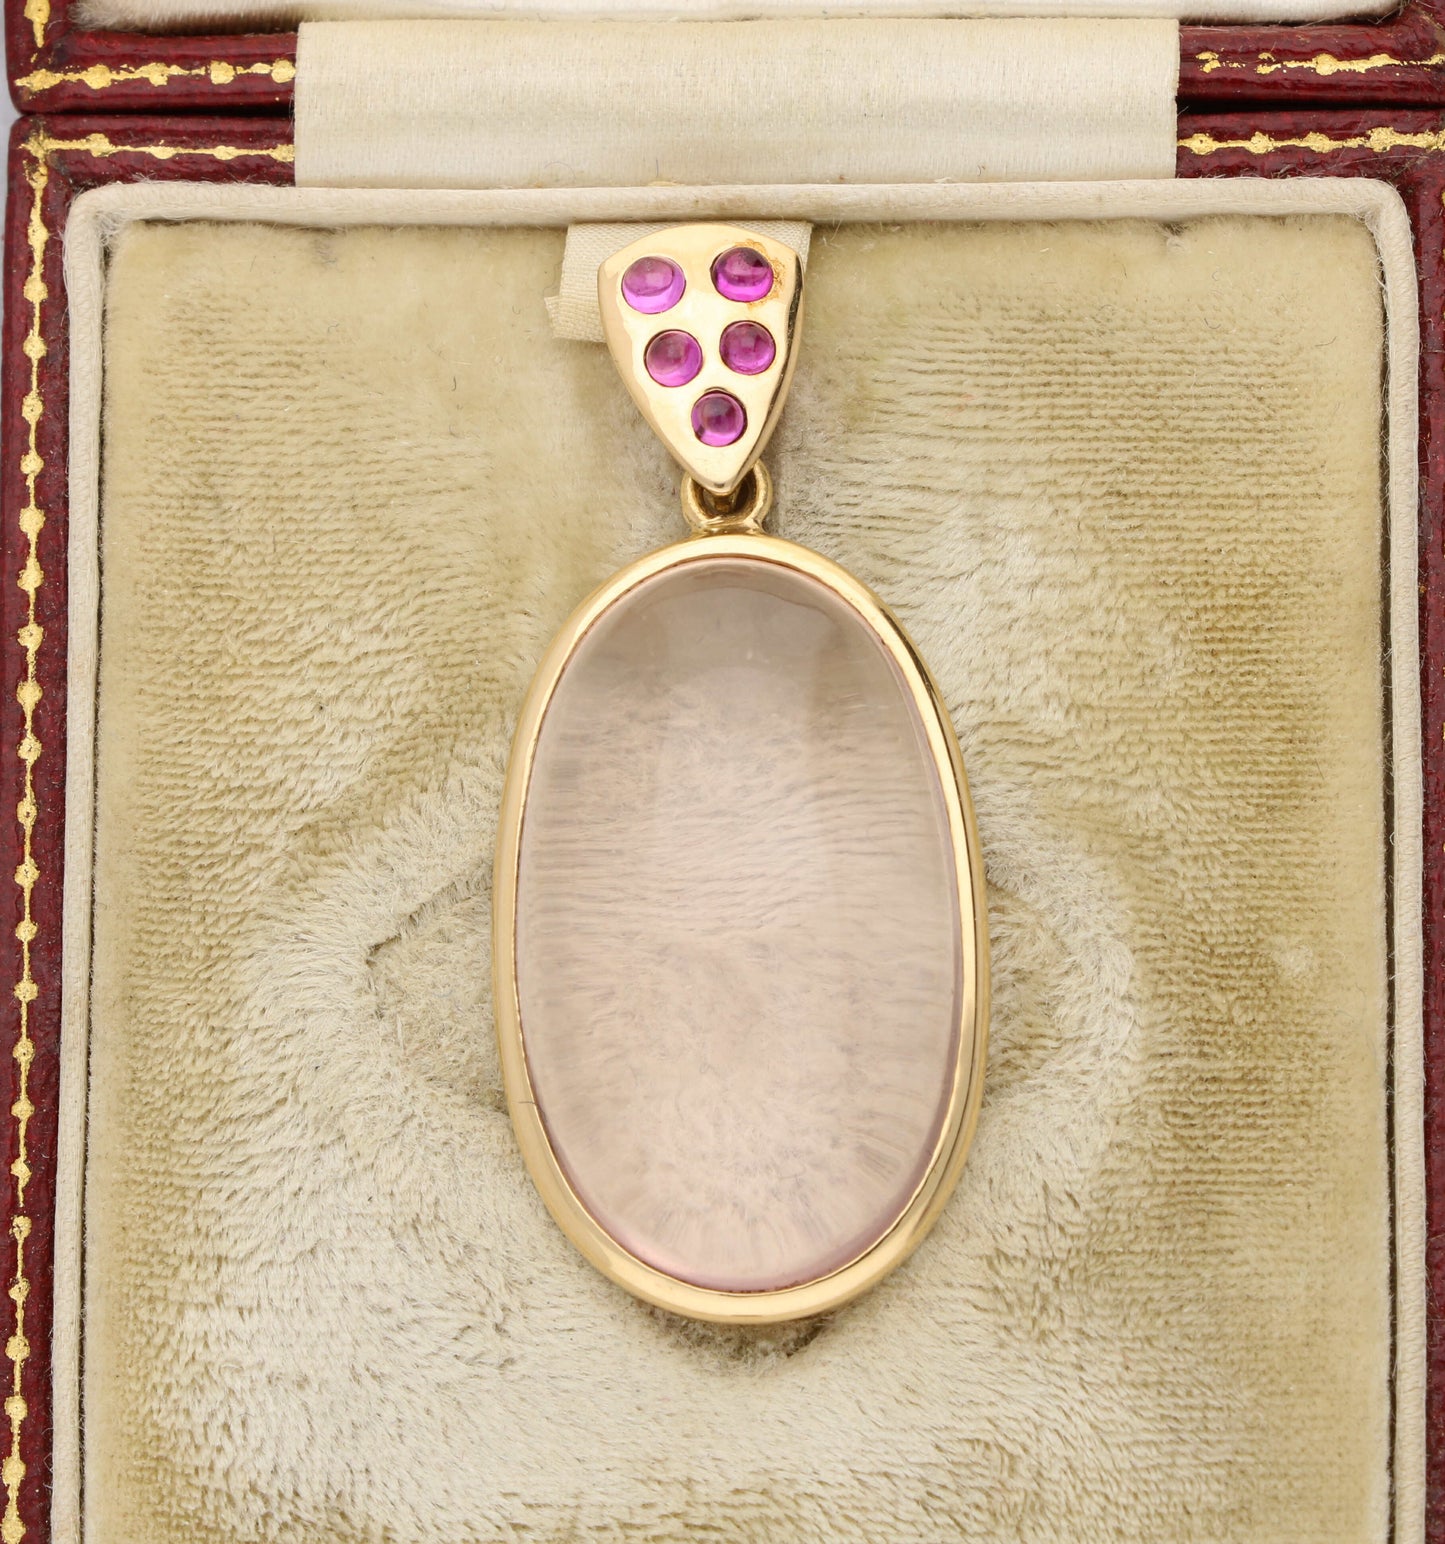 18ct moonstone and pink tourmaline pendant